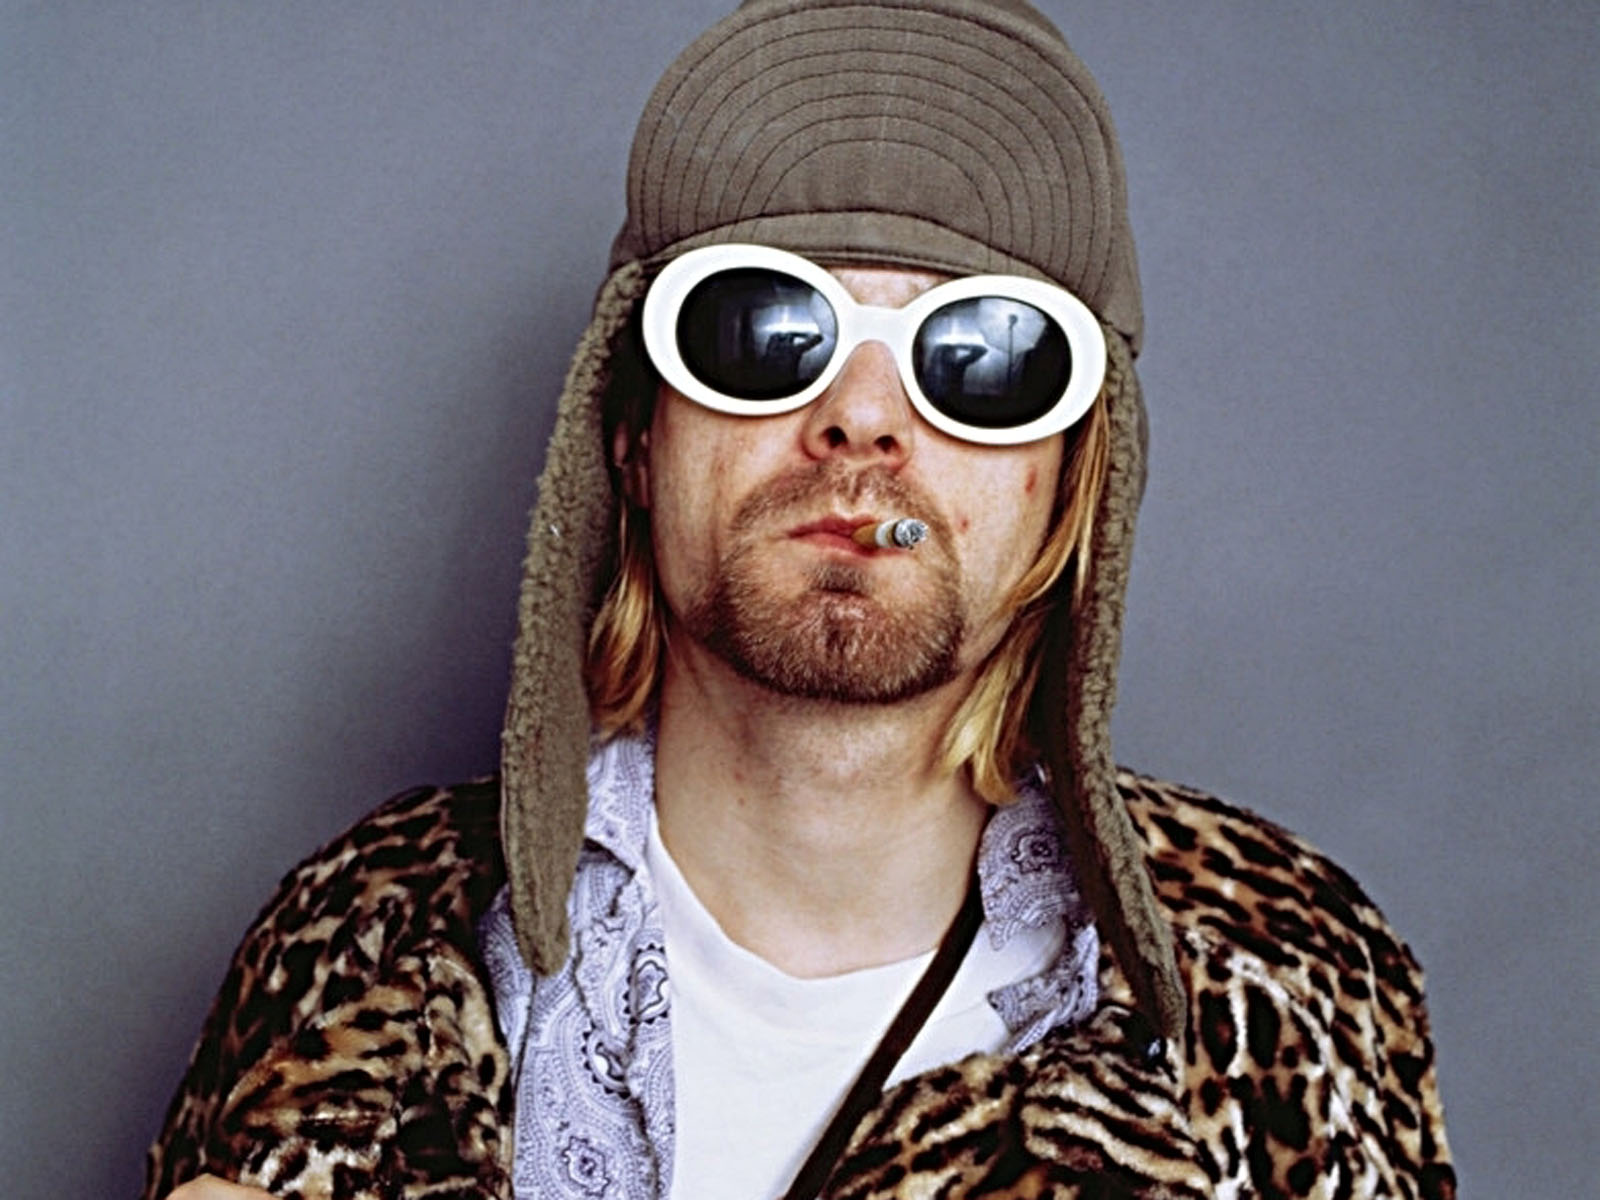 Kurt-Cobain-Montage-of-Heck-cancion-inedita-12-minutos.jpg